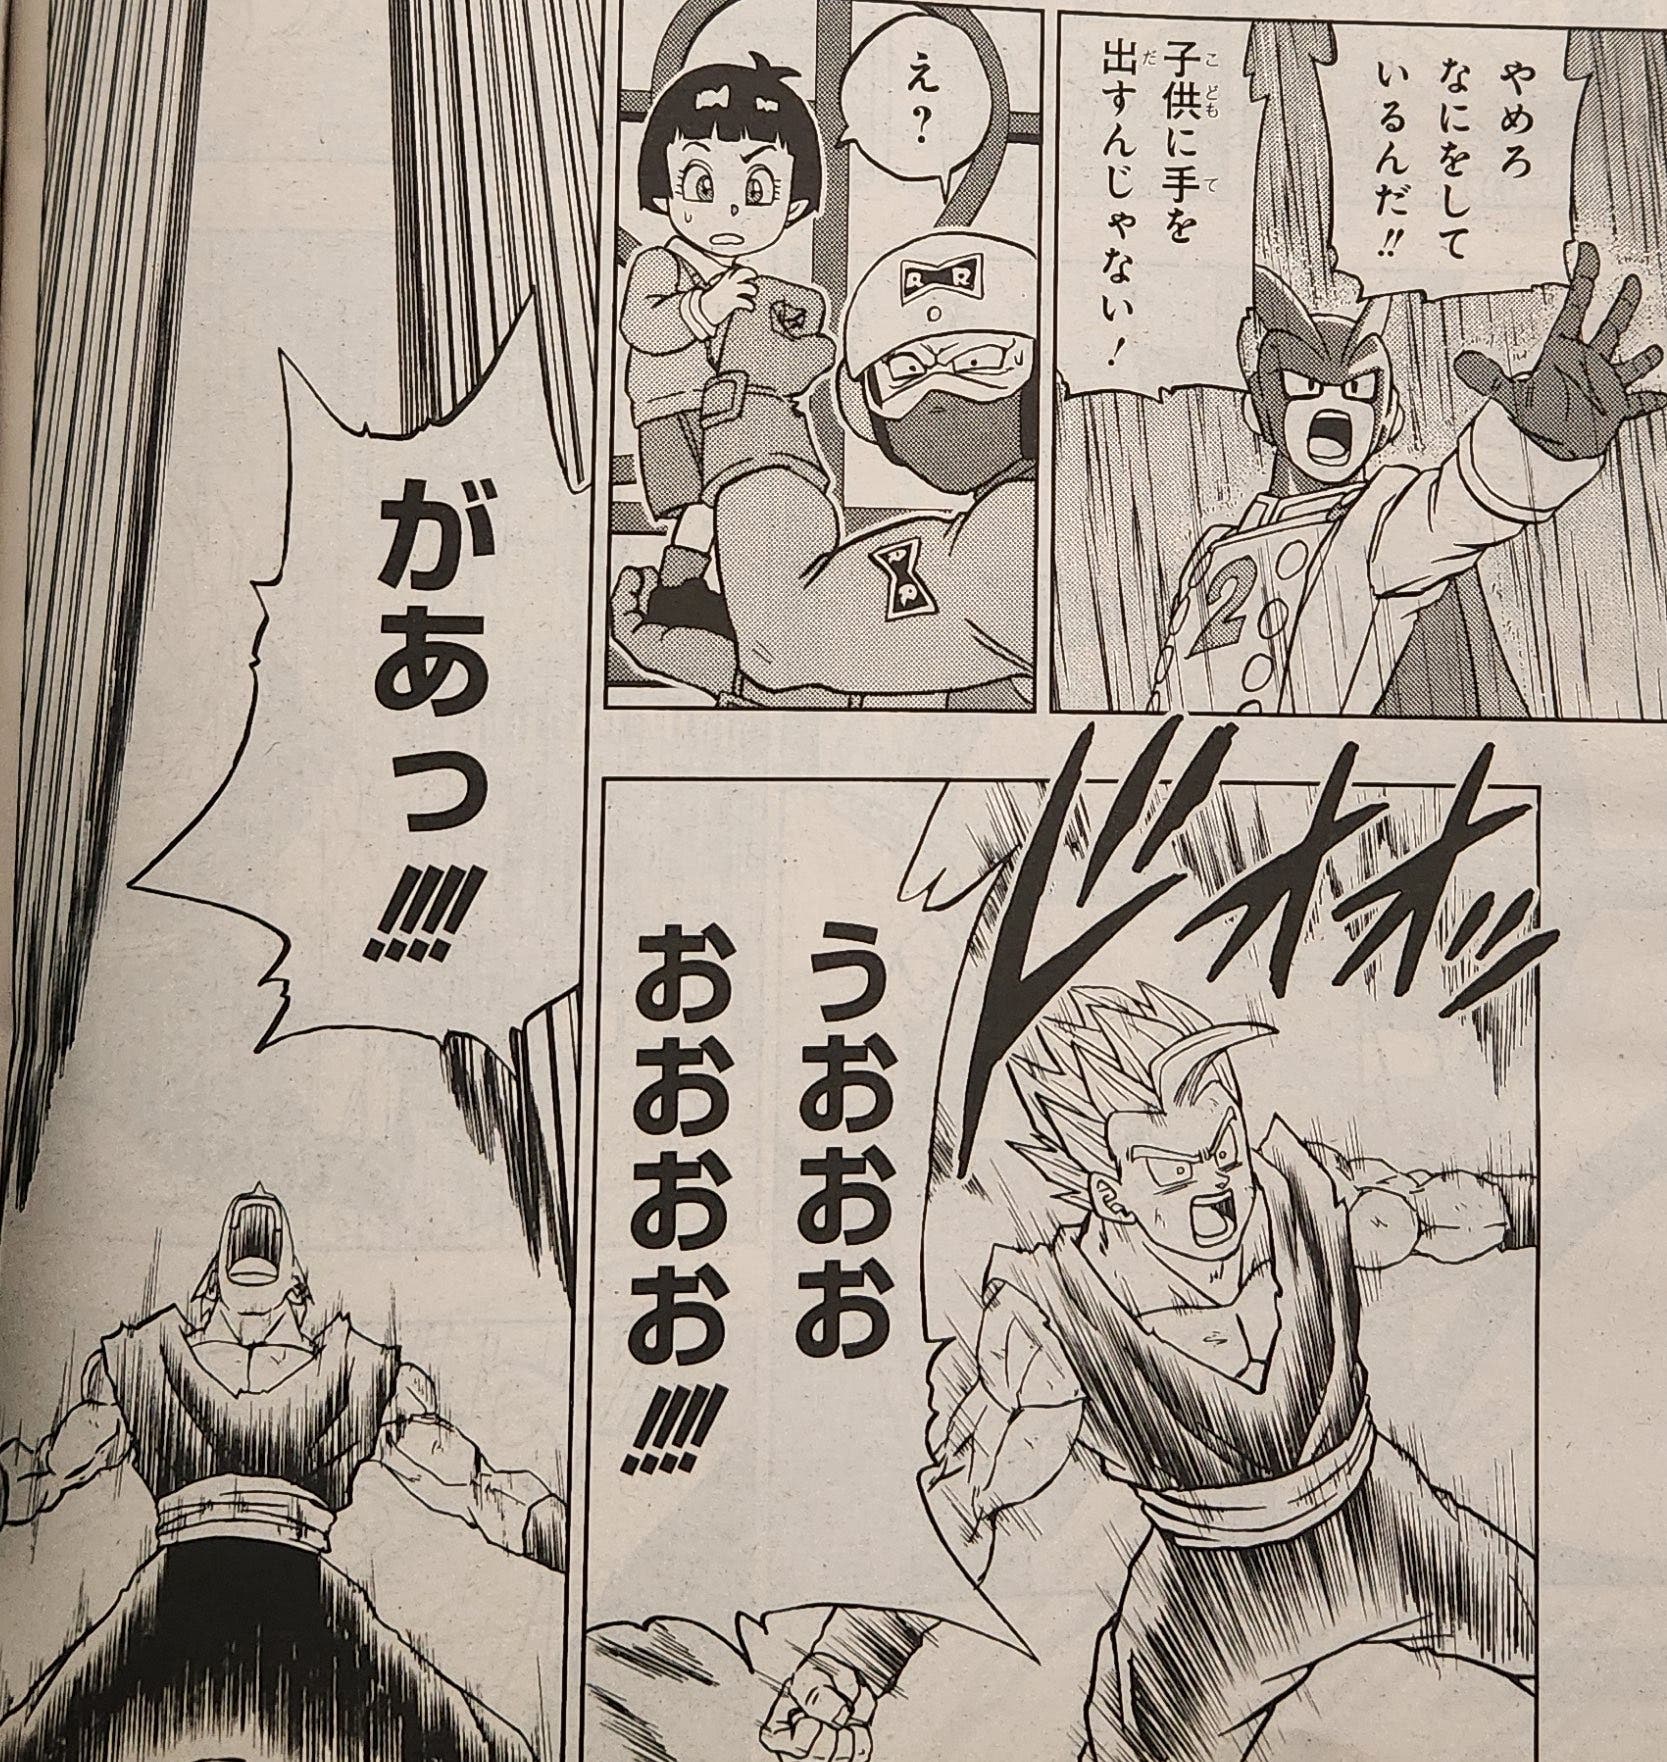 DRAGON BALL SUPER【Manga 94】Adelanto